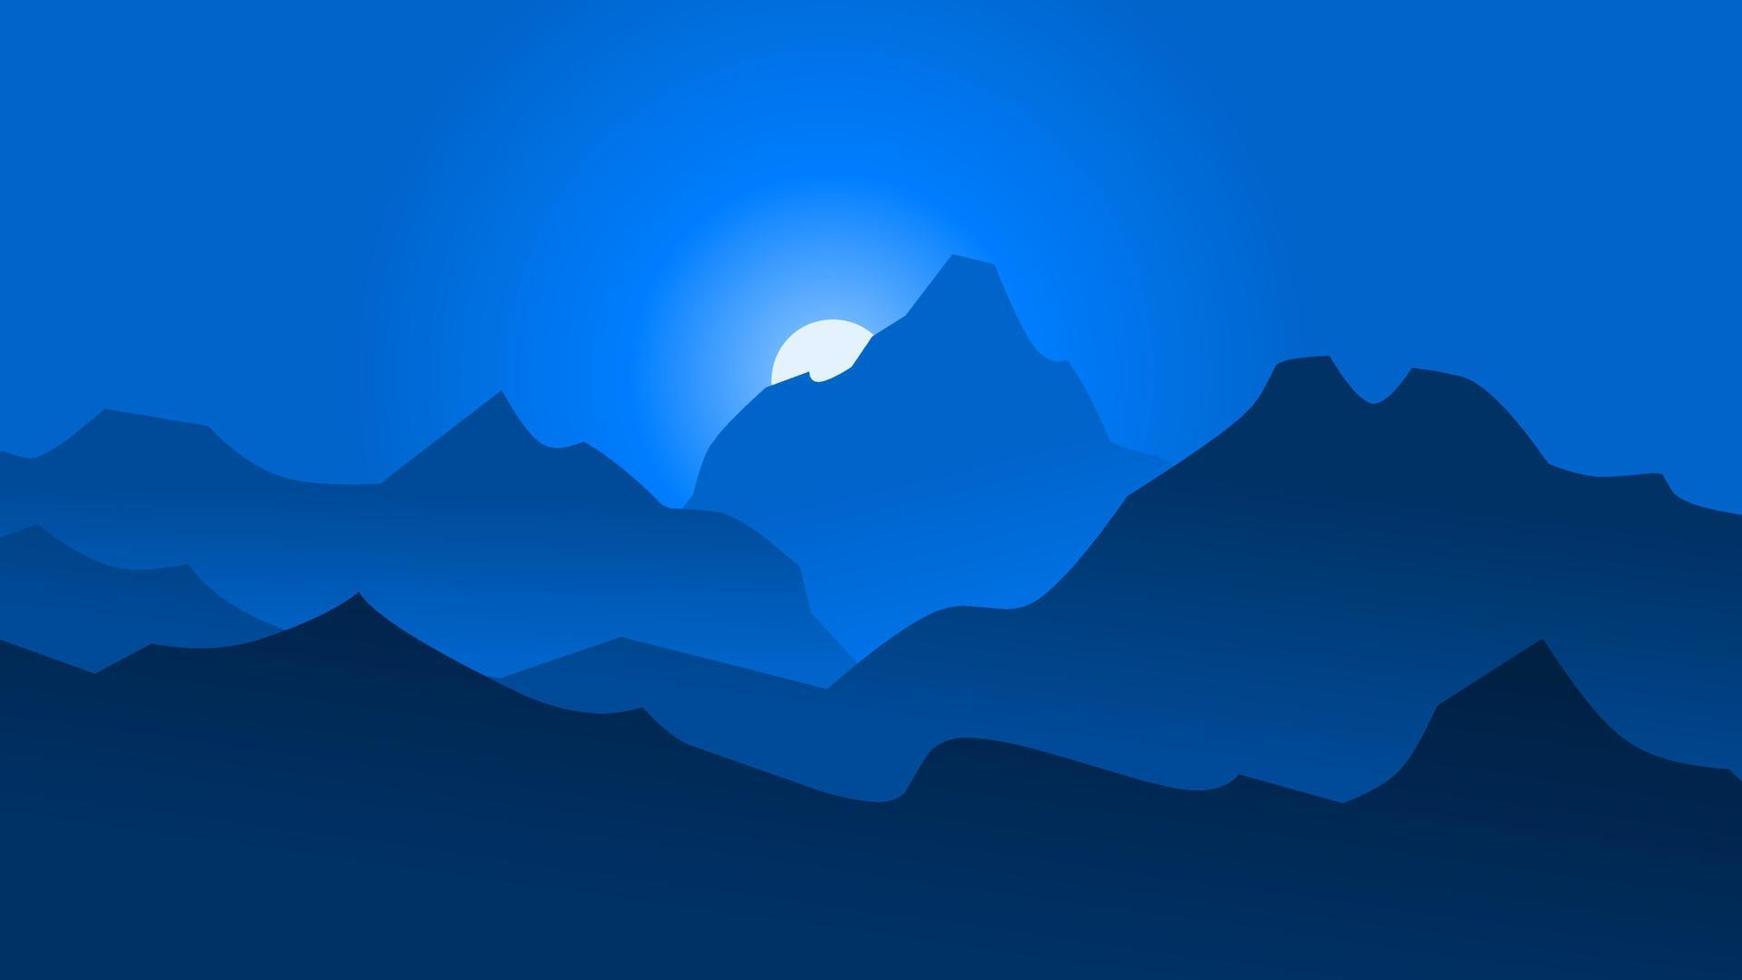 blauw nacht lucht berg landschap vector